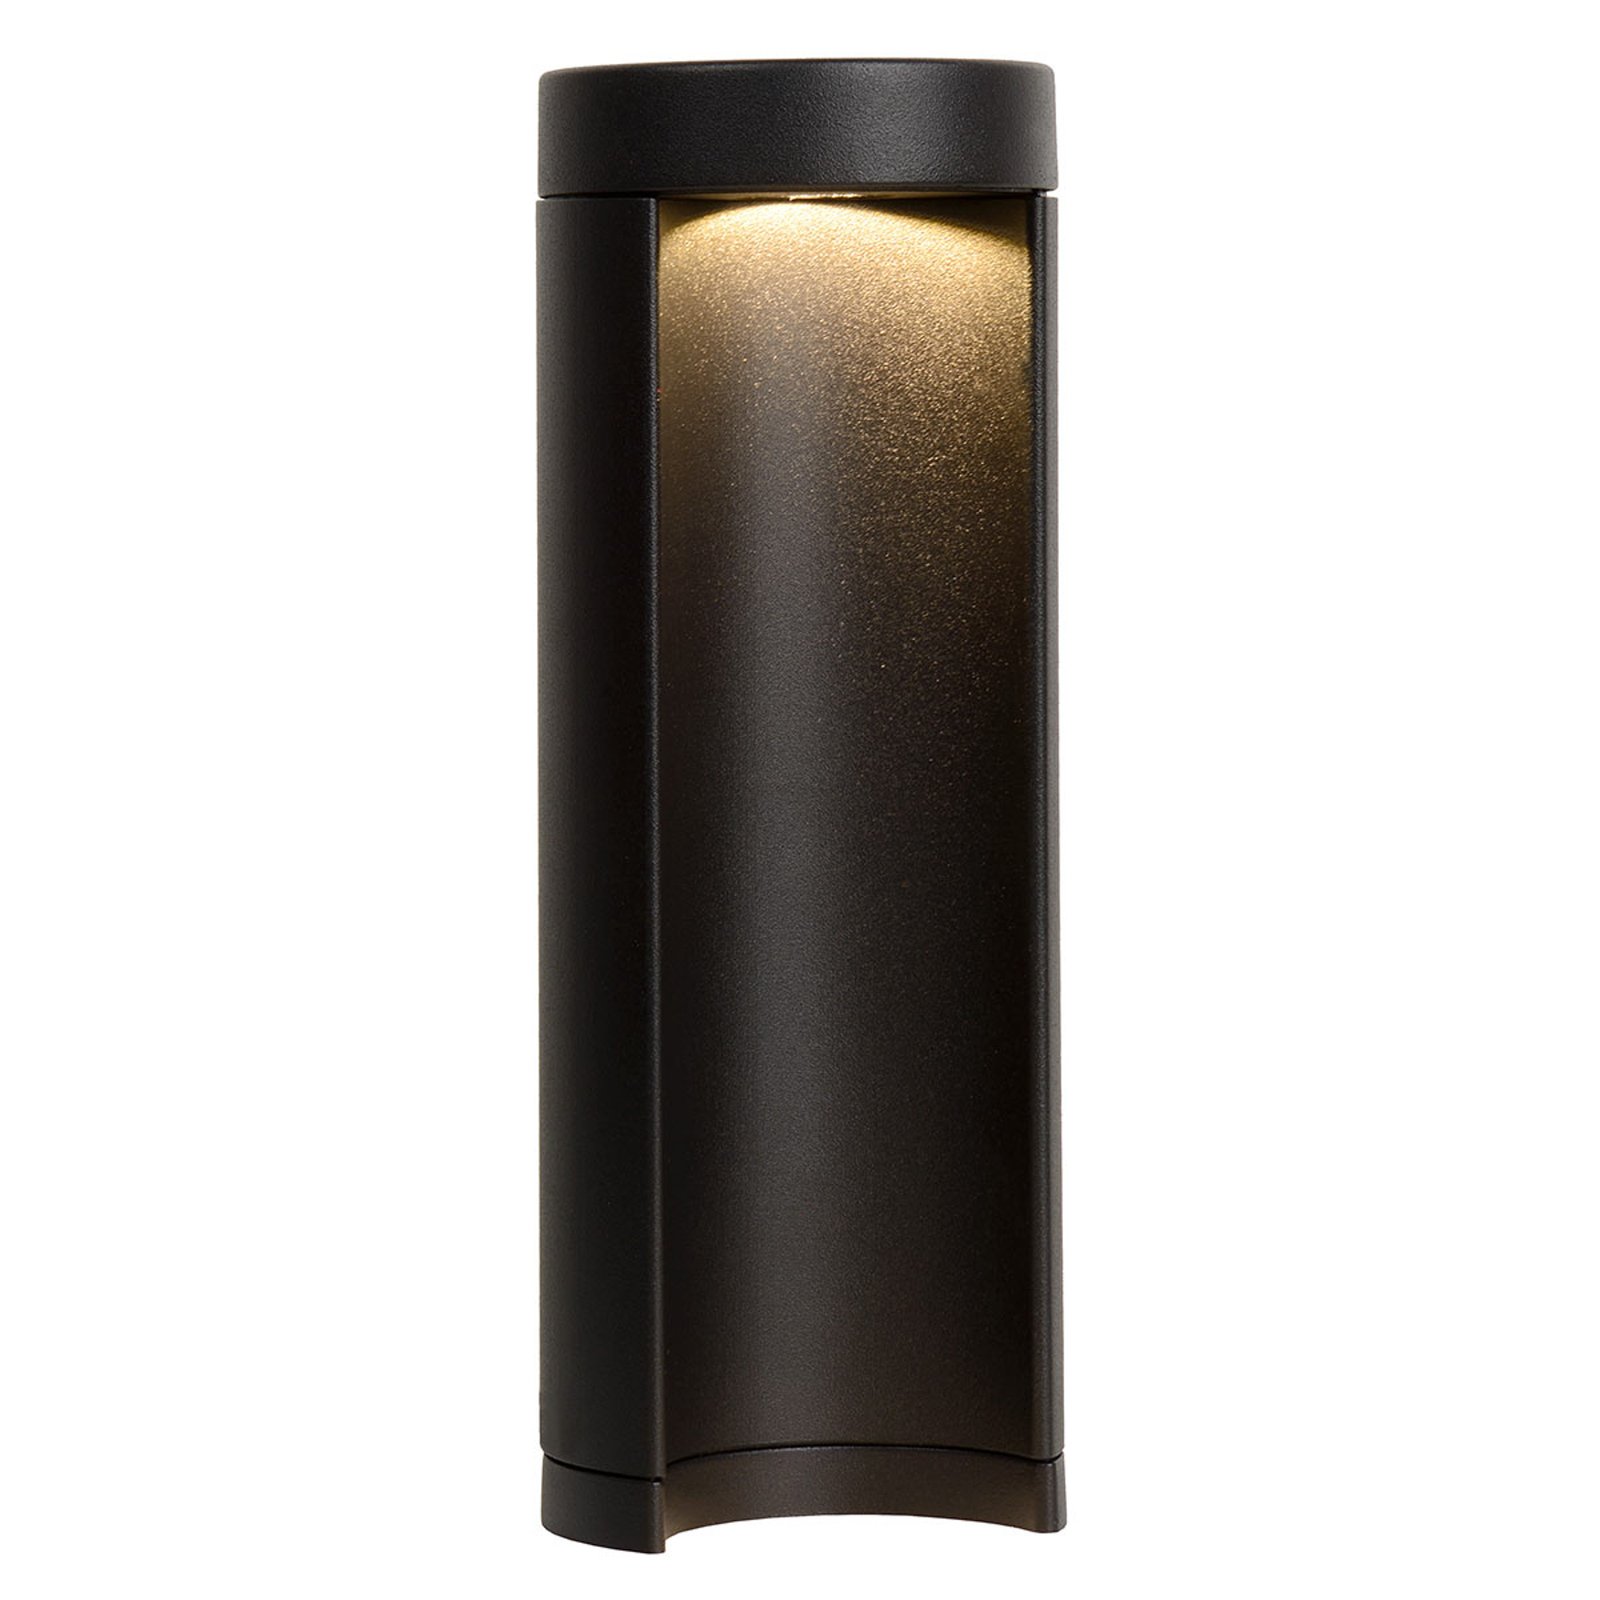 Combo LED sokkellamp in aantrekkelijk design, 25 cm